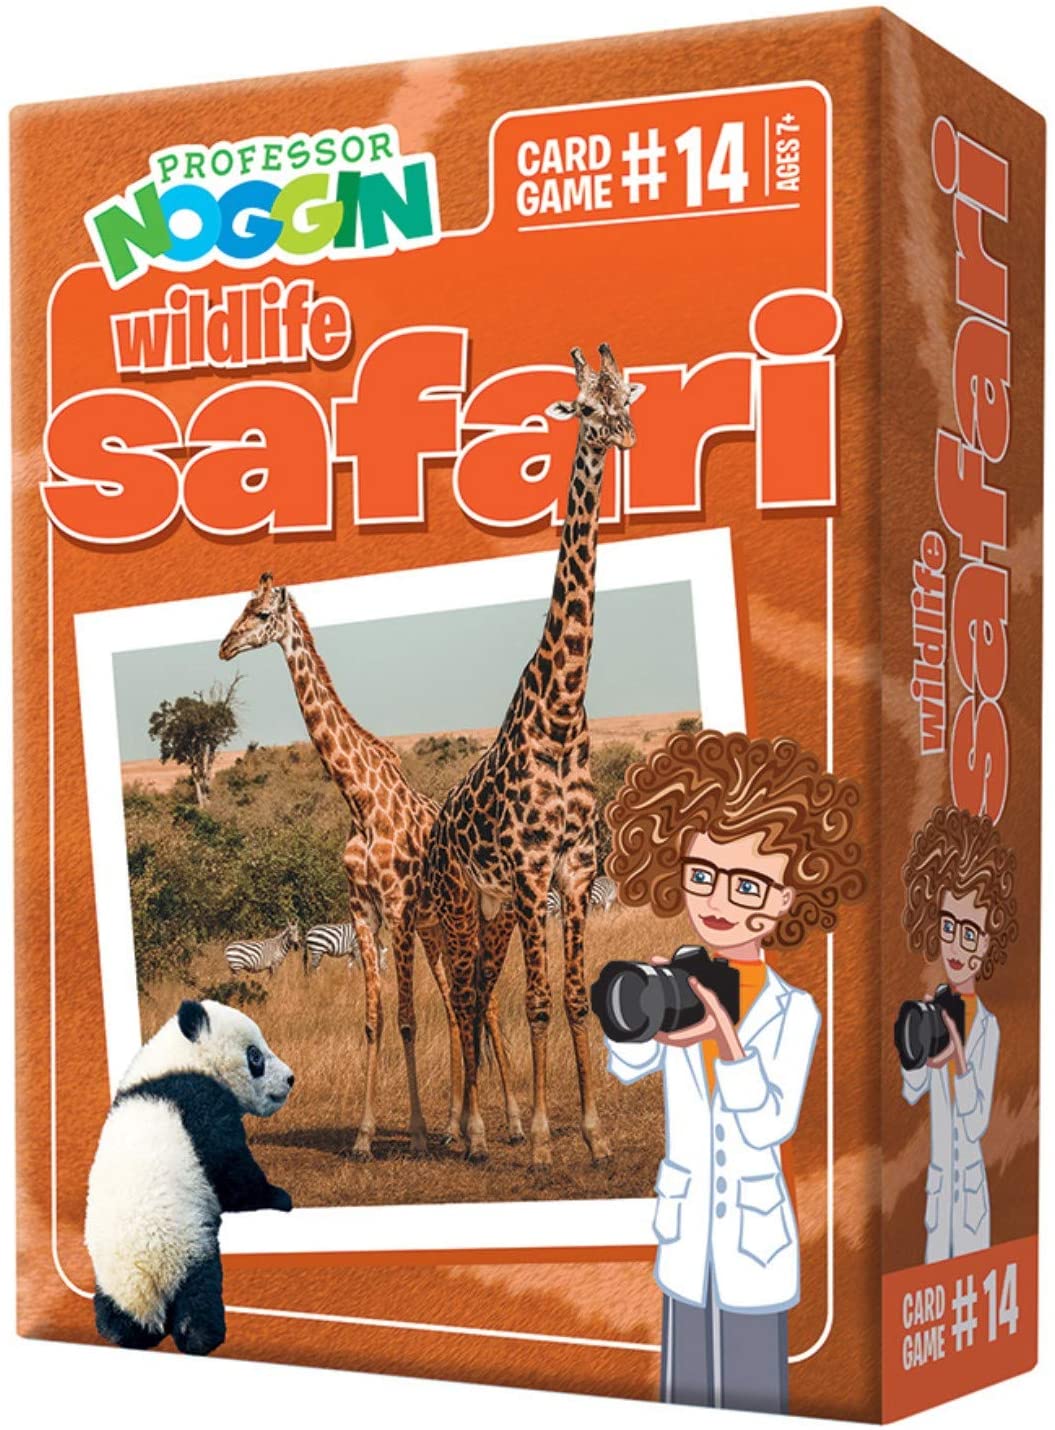 Professor Noggin Wildlife Safari